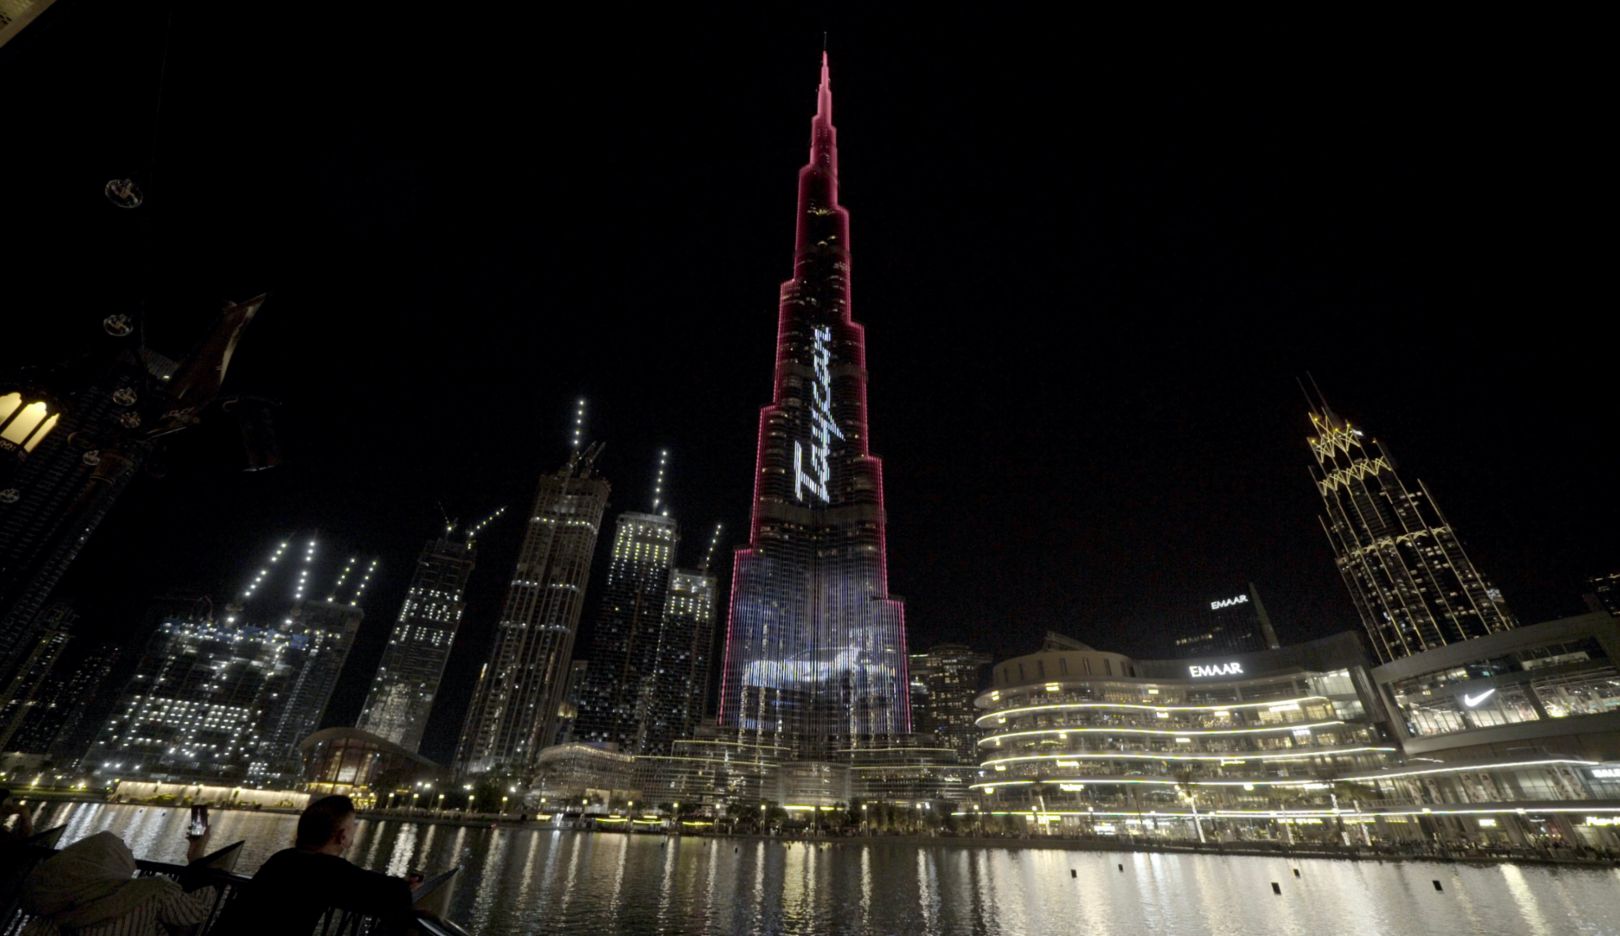 Porsche Taycan electrifies world’s tallest building Burj Khalifa in Dubai